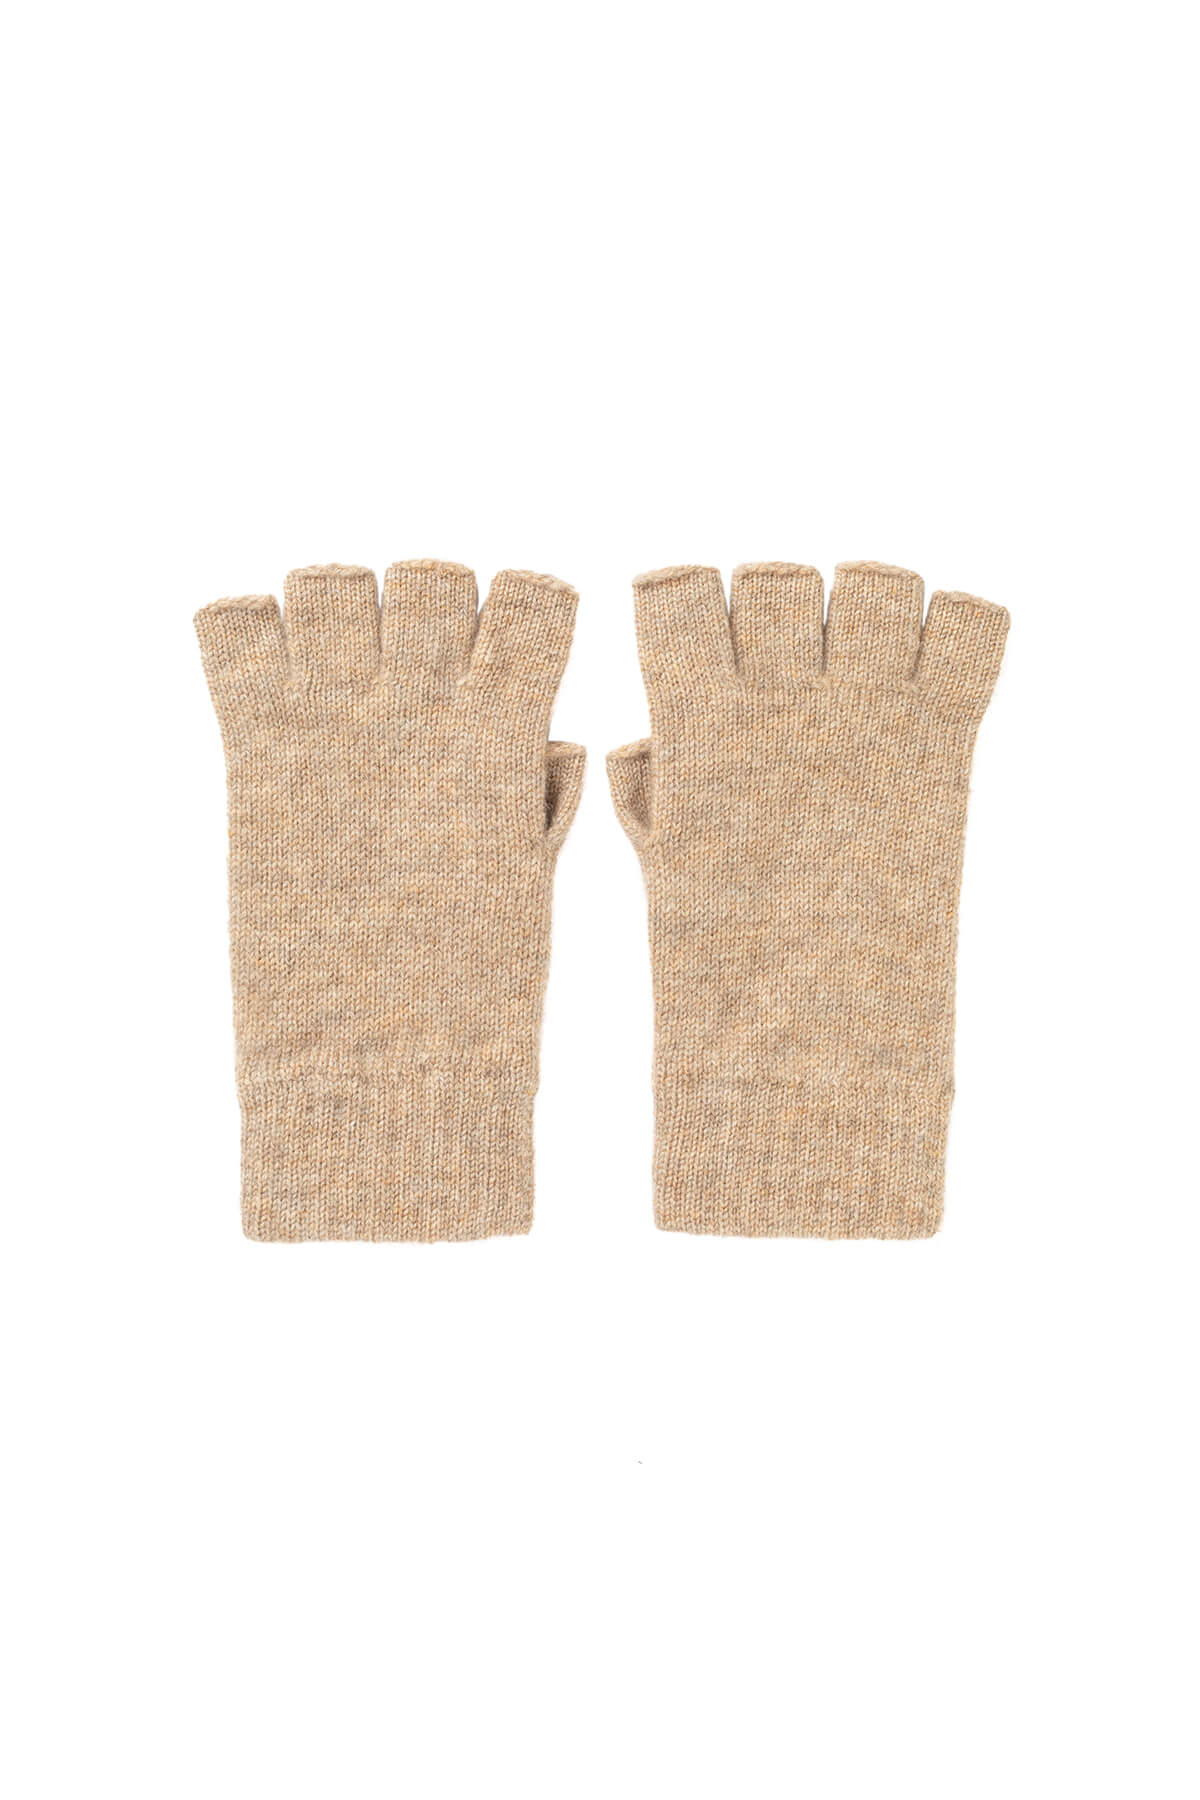 Johnstons of Elgin’s Oatmeal Women's Fingerless Cashmere Gloves a white background HAY02223HB0210